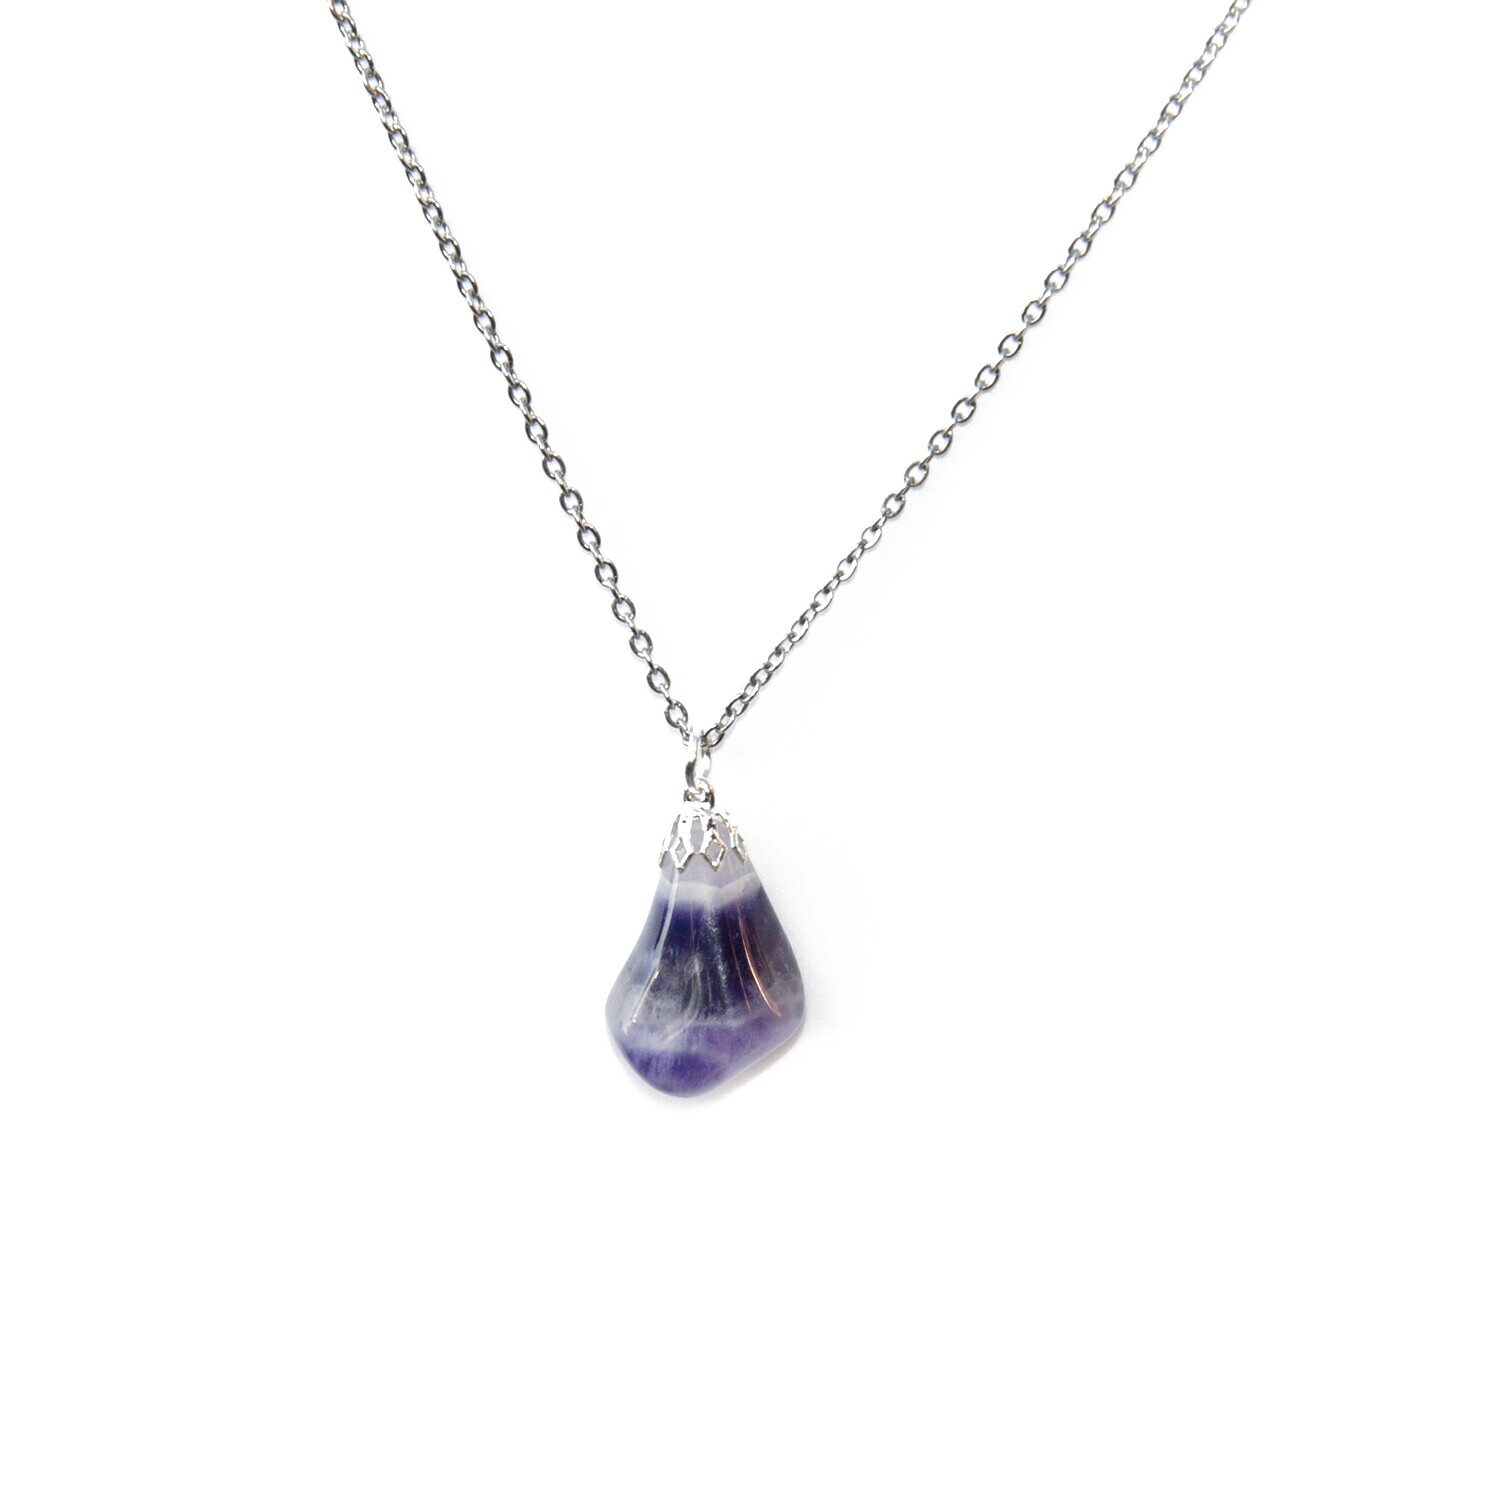 Amethyst pendant gemstone necklace